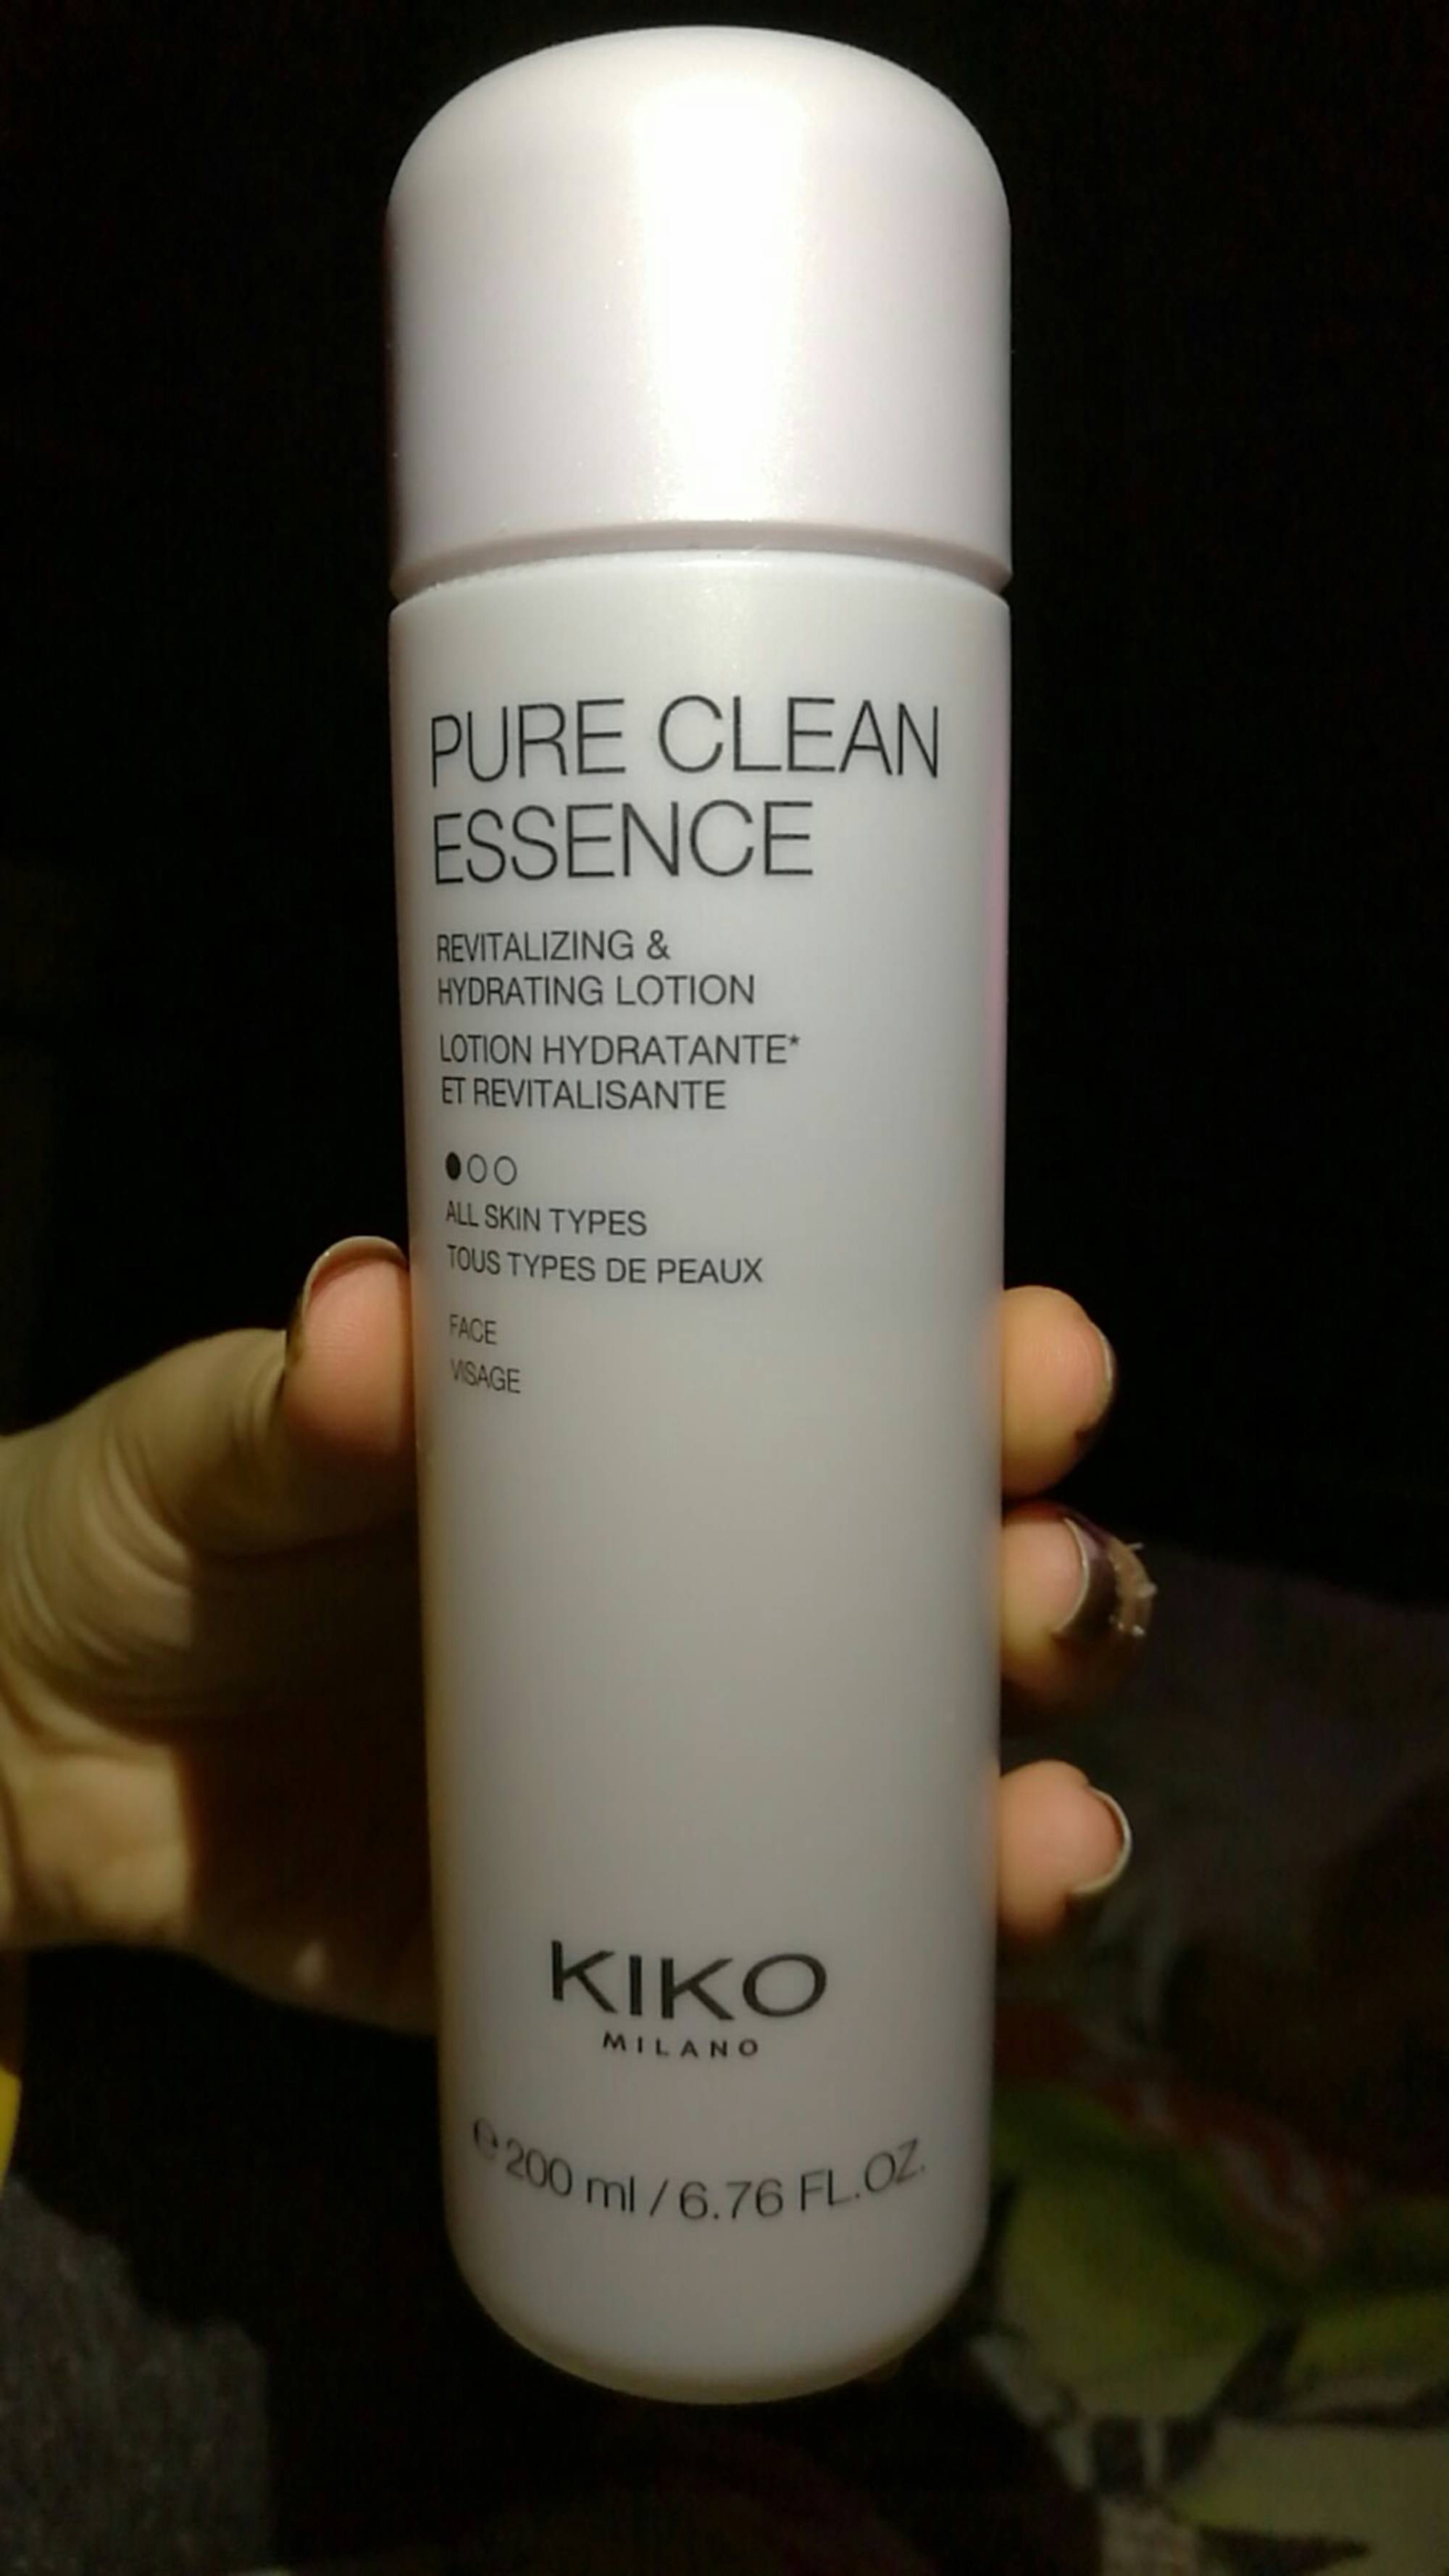 KIKO - Pure clean essence - Lotion hydratante et revitalisante